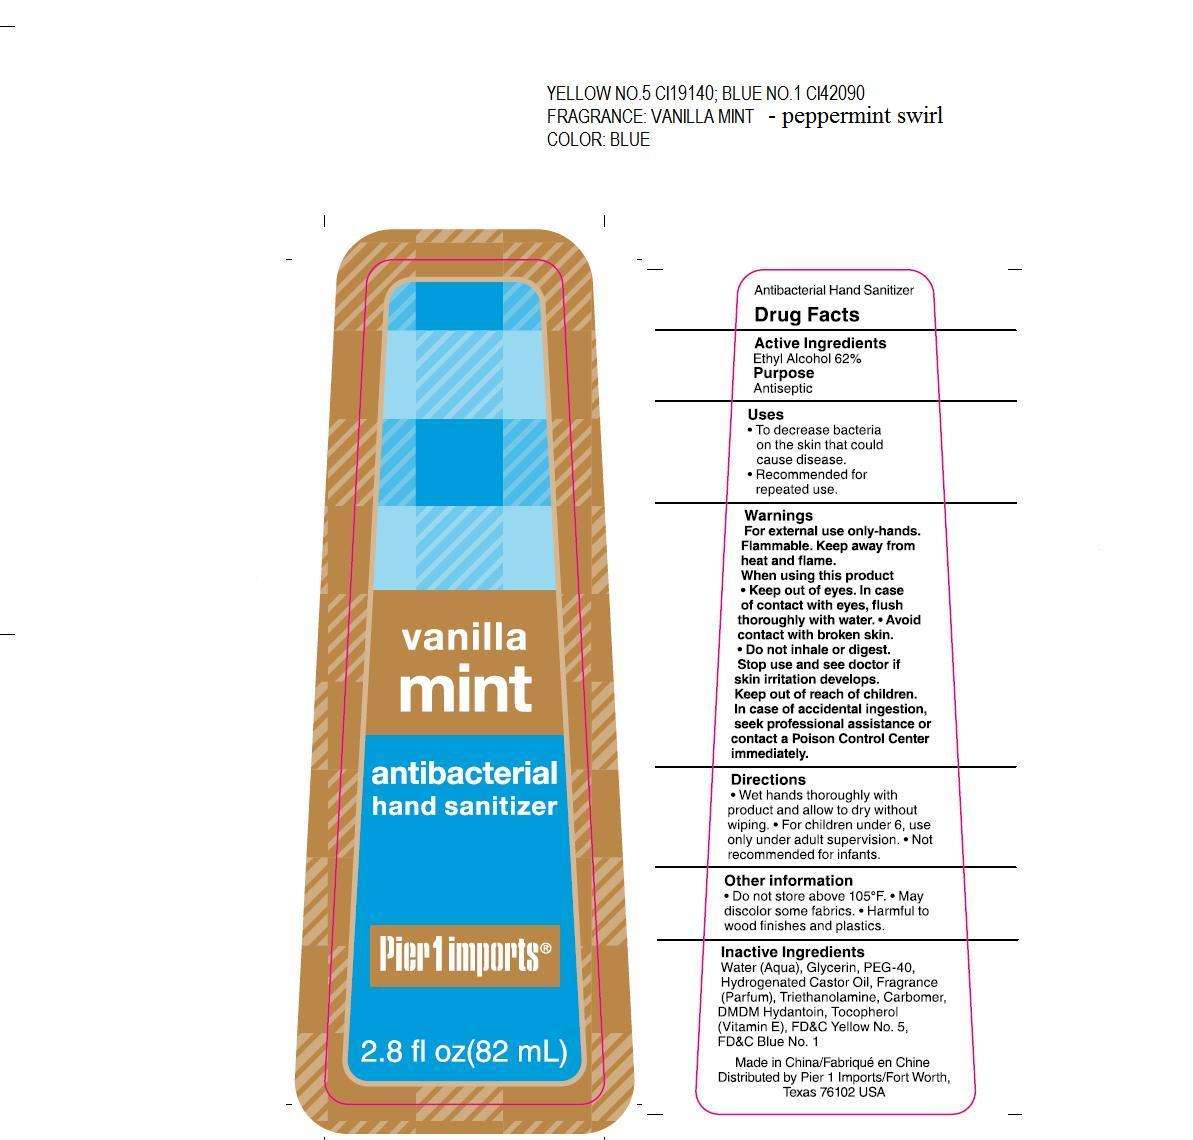 Pier 1 Imports Vanilla Mint Anti-Bacterial Hand Sanitizer